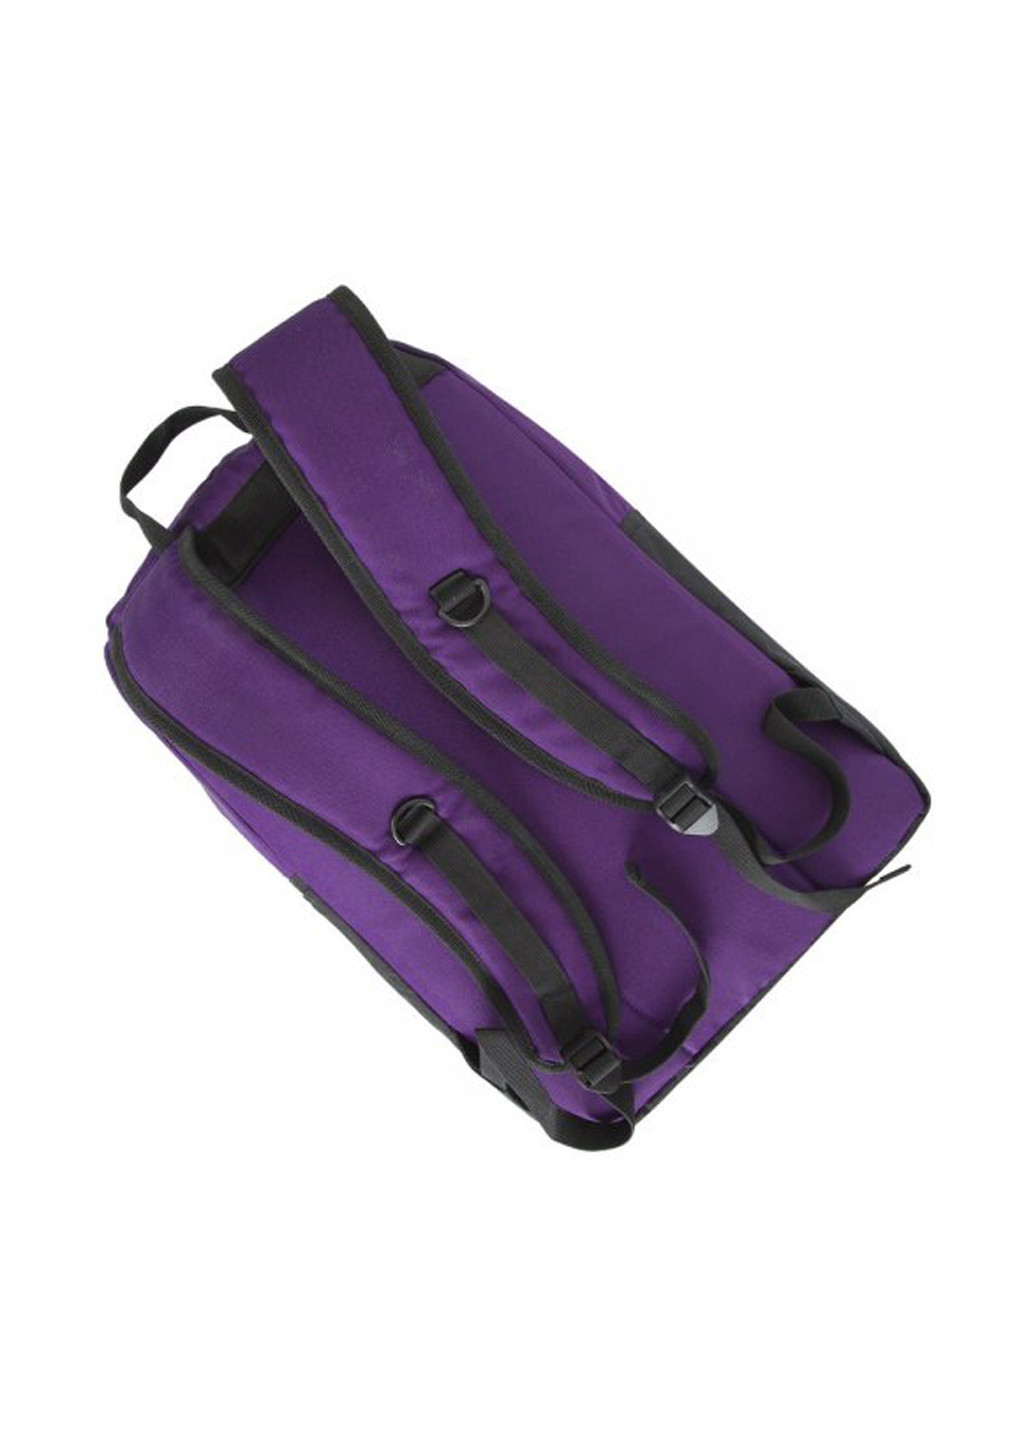 Рюкзак для ноутбука RIVACASE 5560 (violet/black) (139252107)